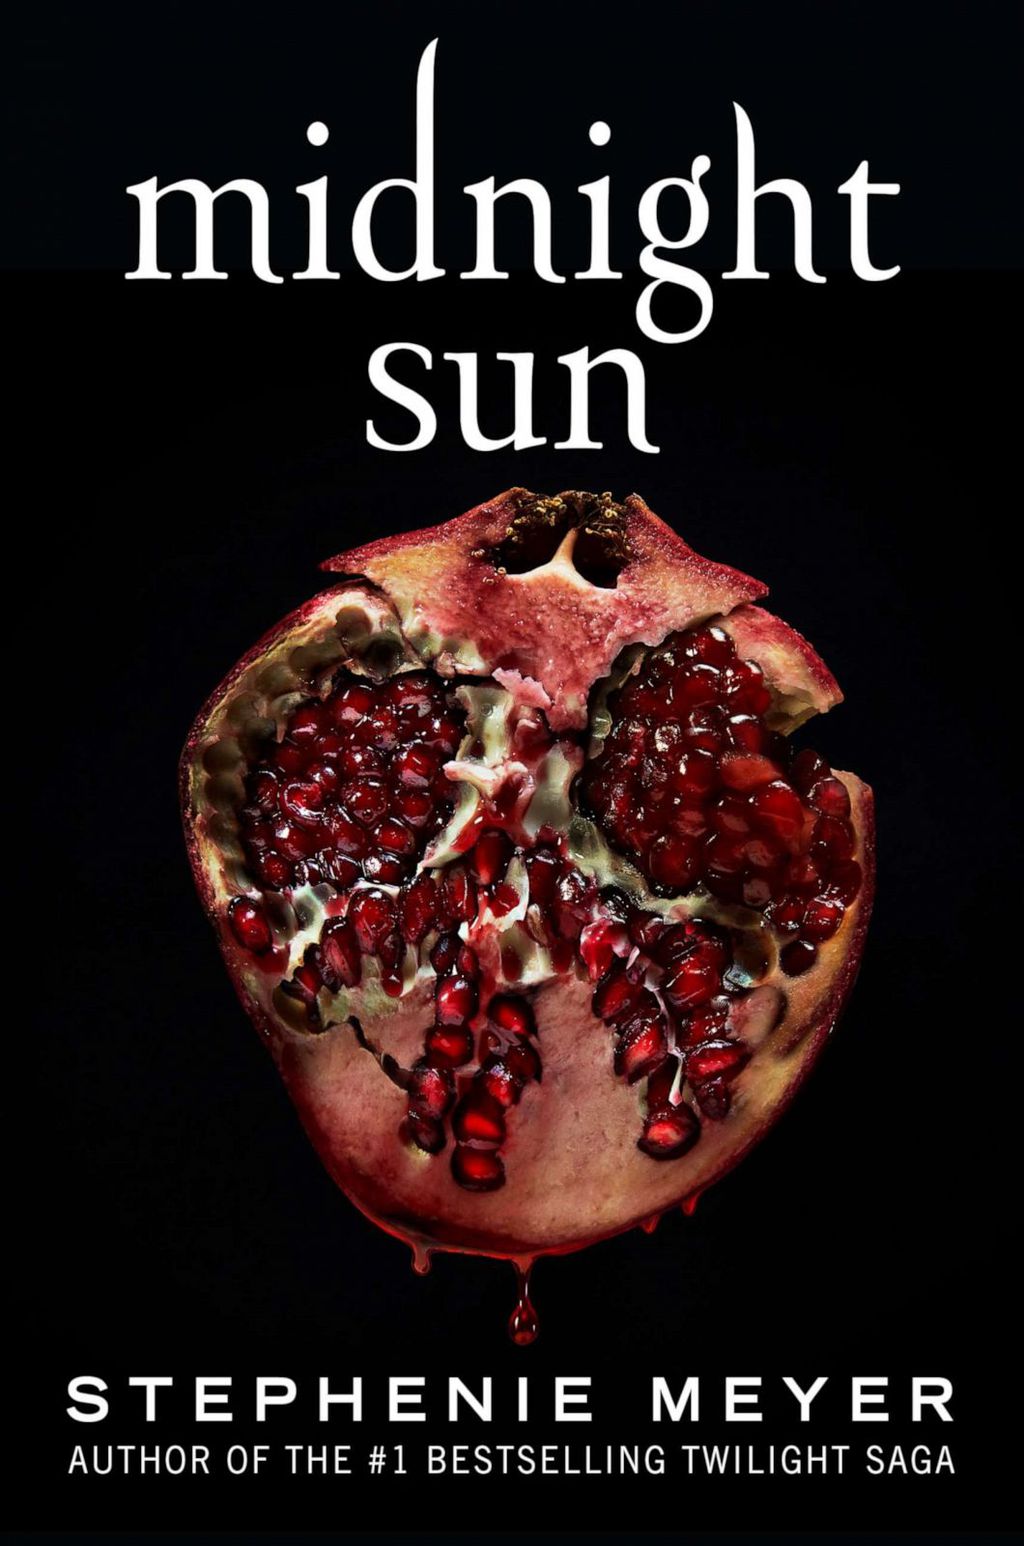 Capa oficial do livro Midnight Sun (Imagem: Little, Brown and Company)